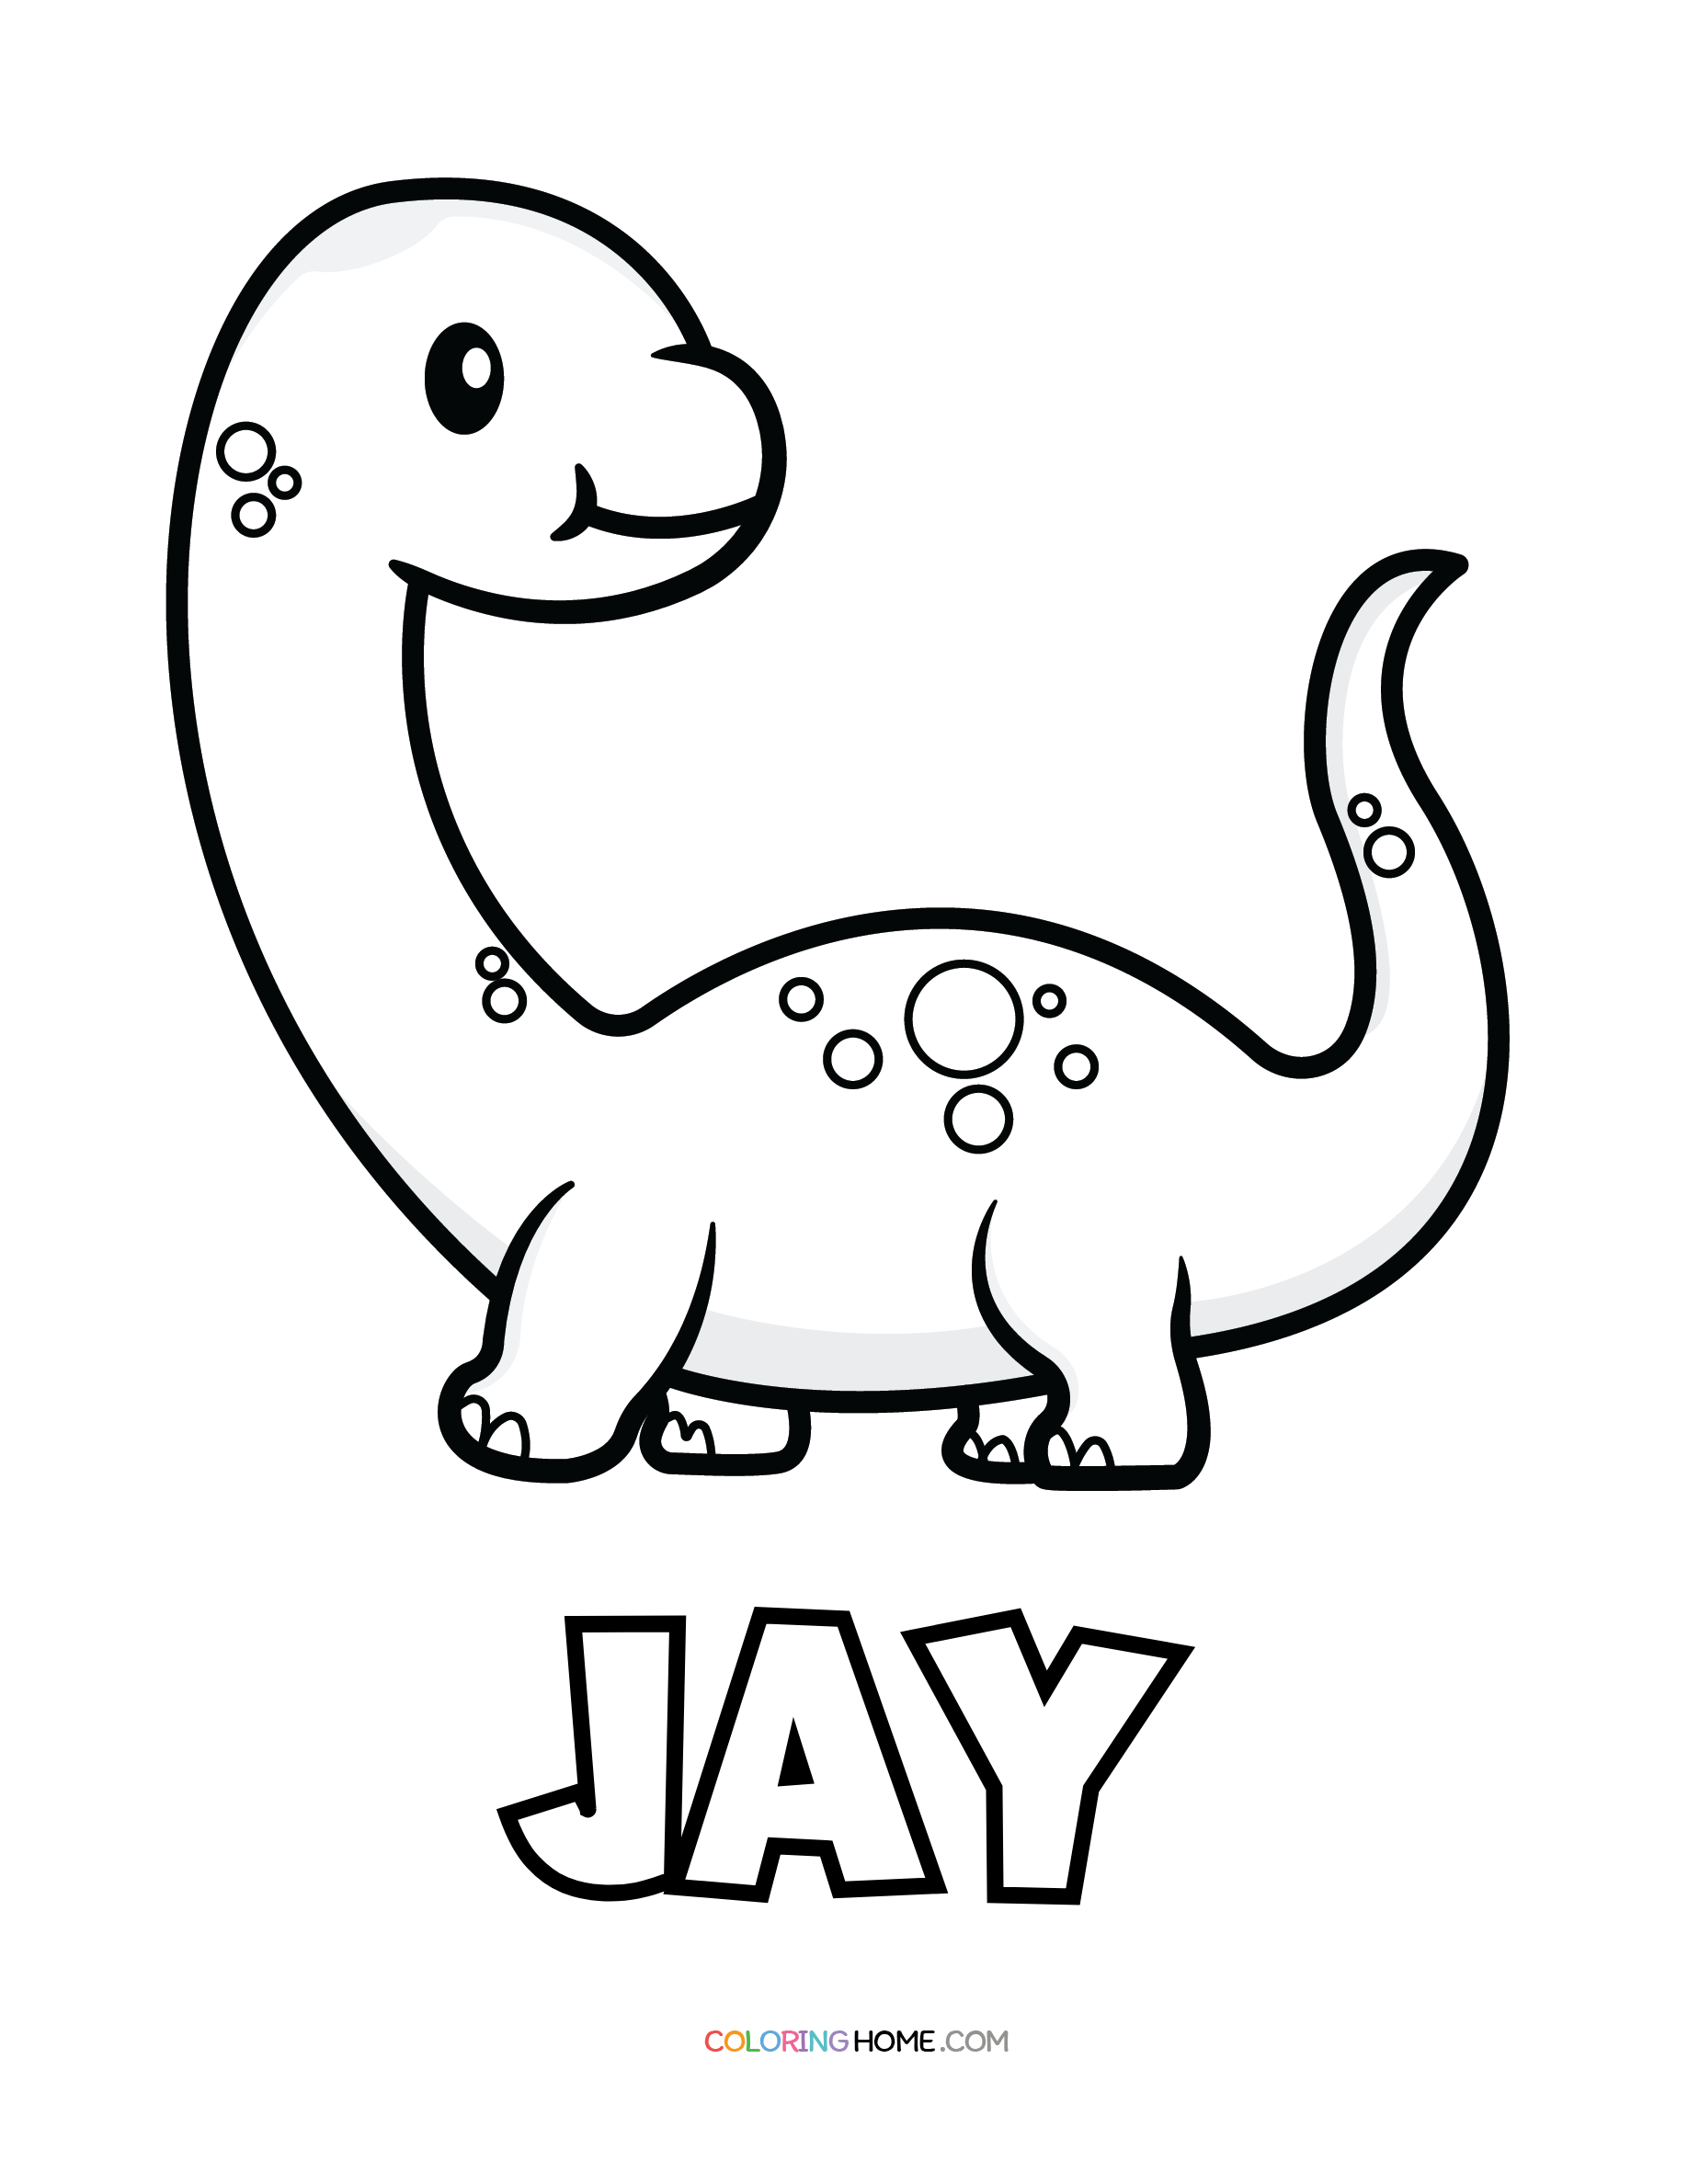 Jay dinosaur coloring page